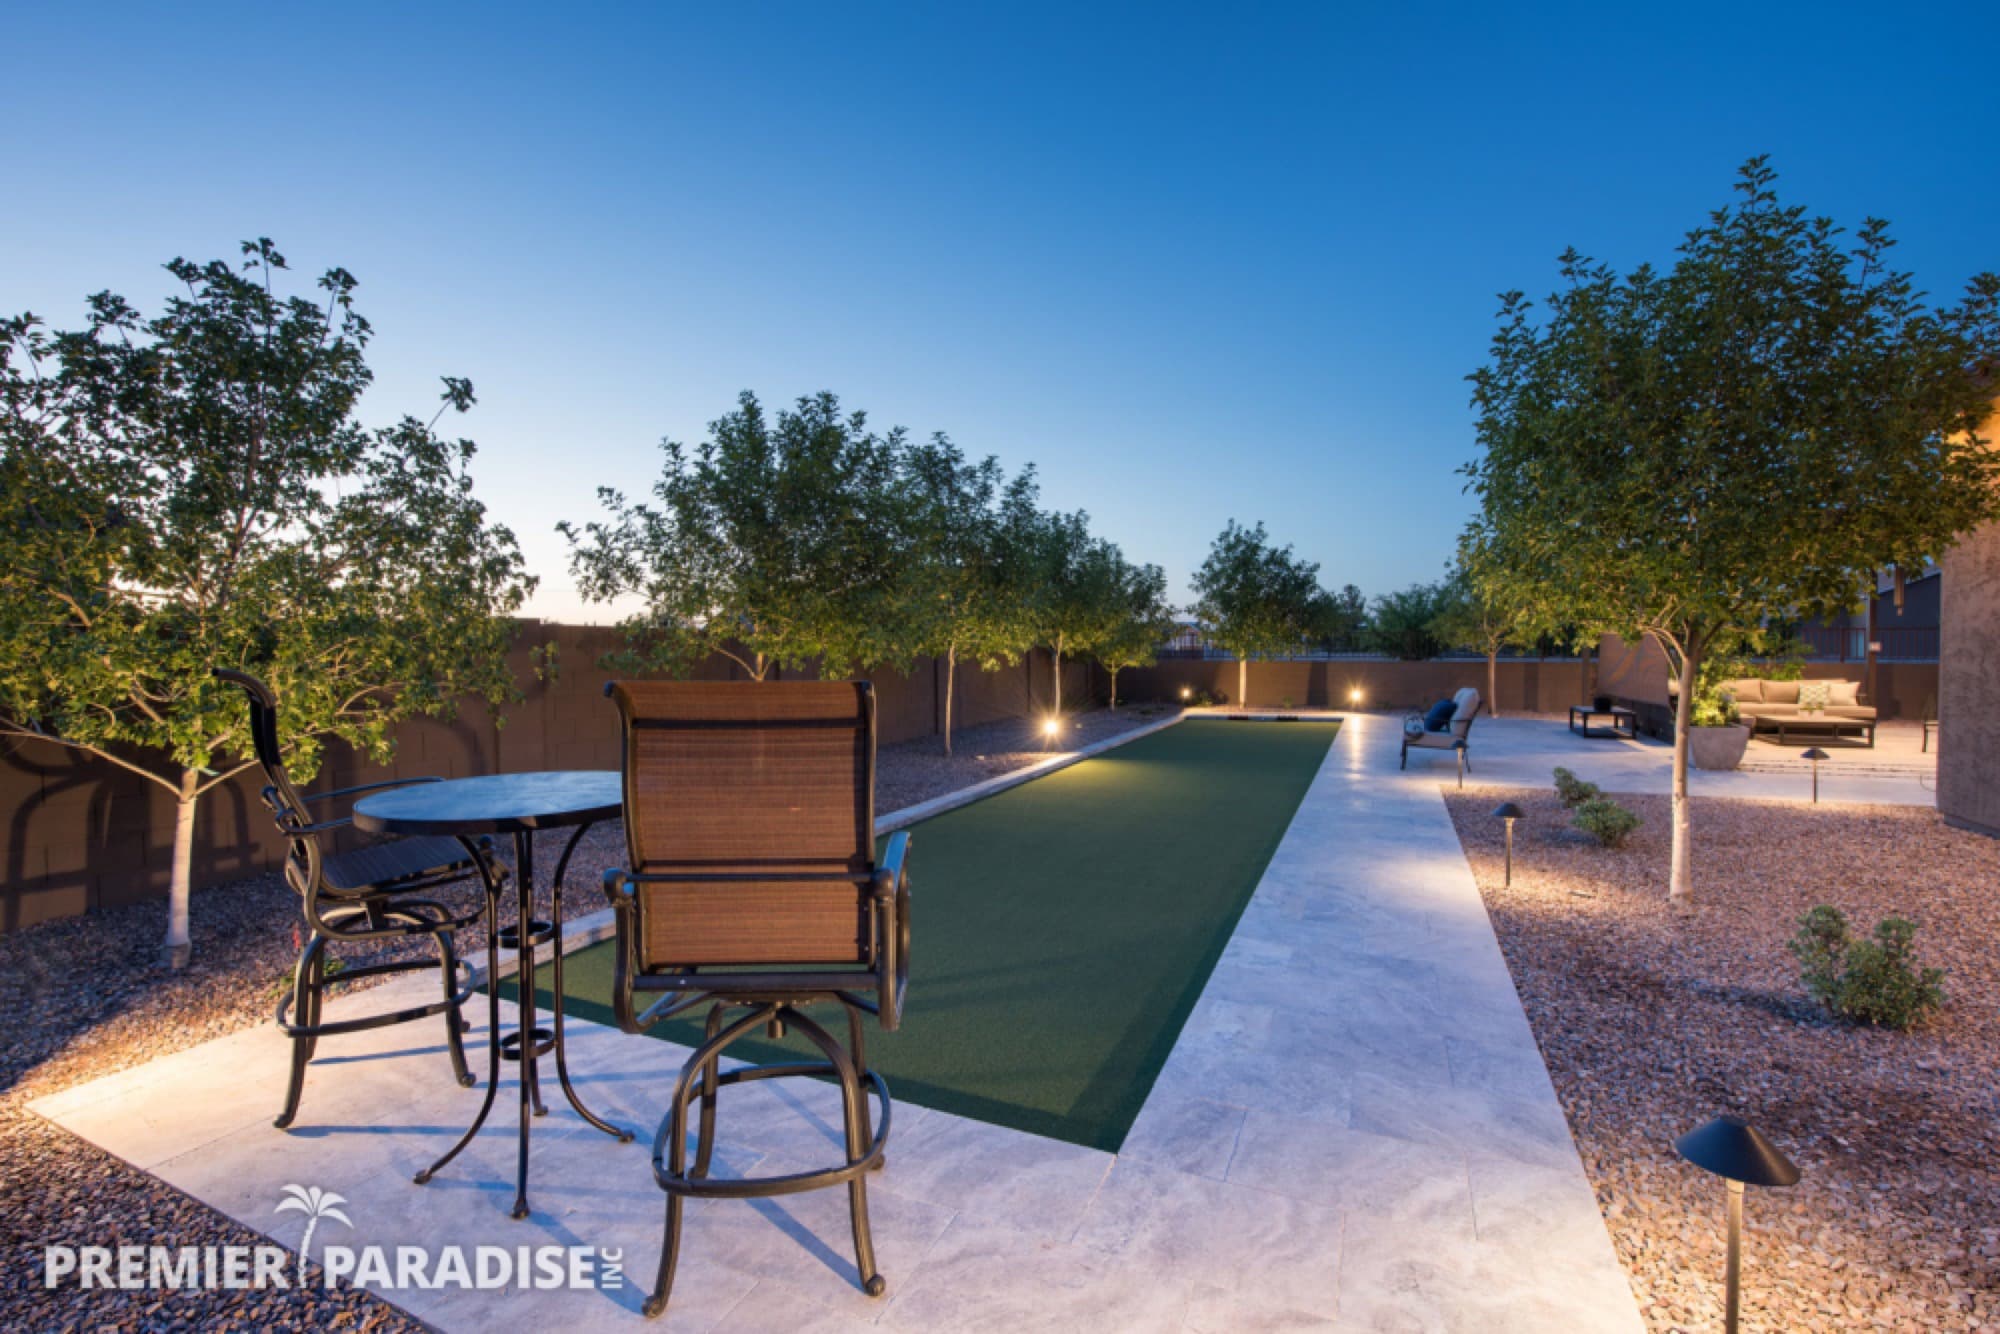 pool designs premier paradise scottsdale gilbert queen creek phoenix arizona givens 6 w